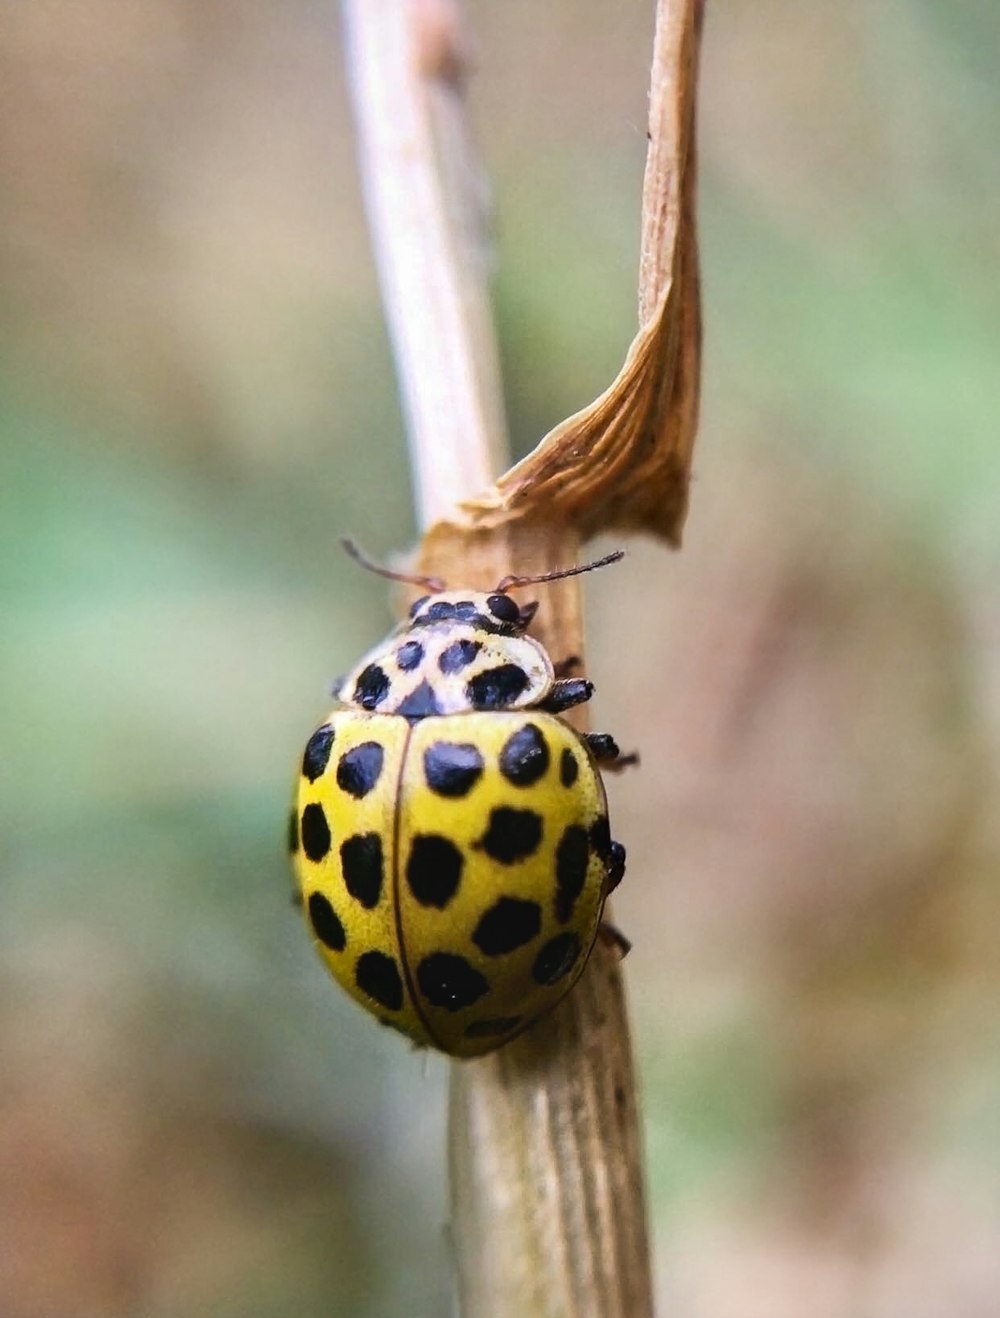 yellow and black ladybug on brown stem in tilt shift lens